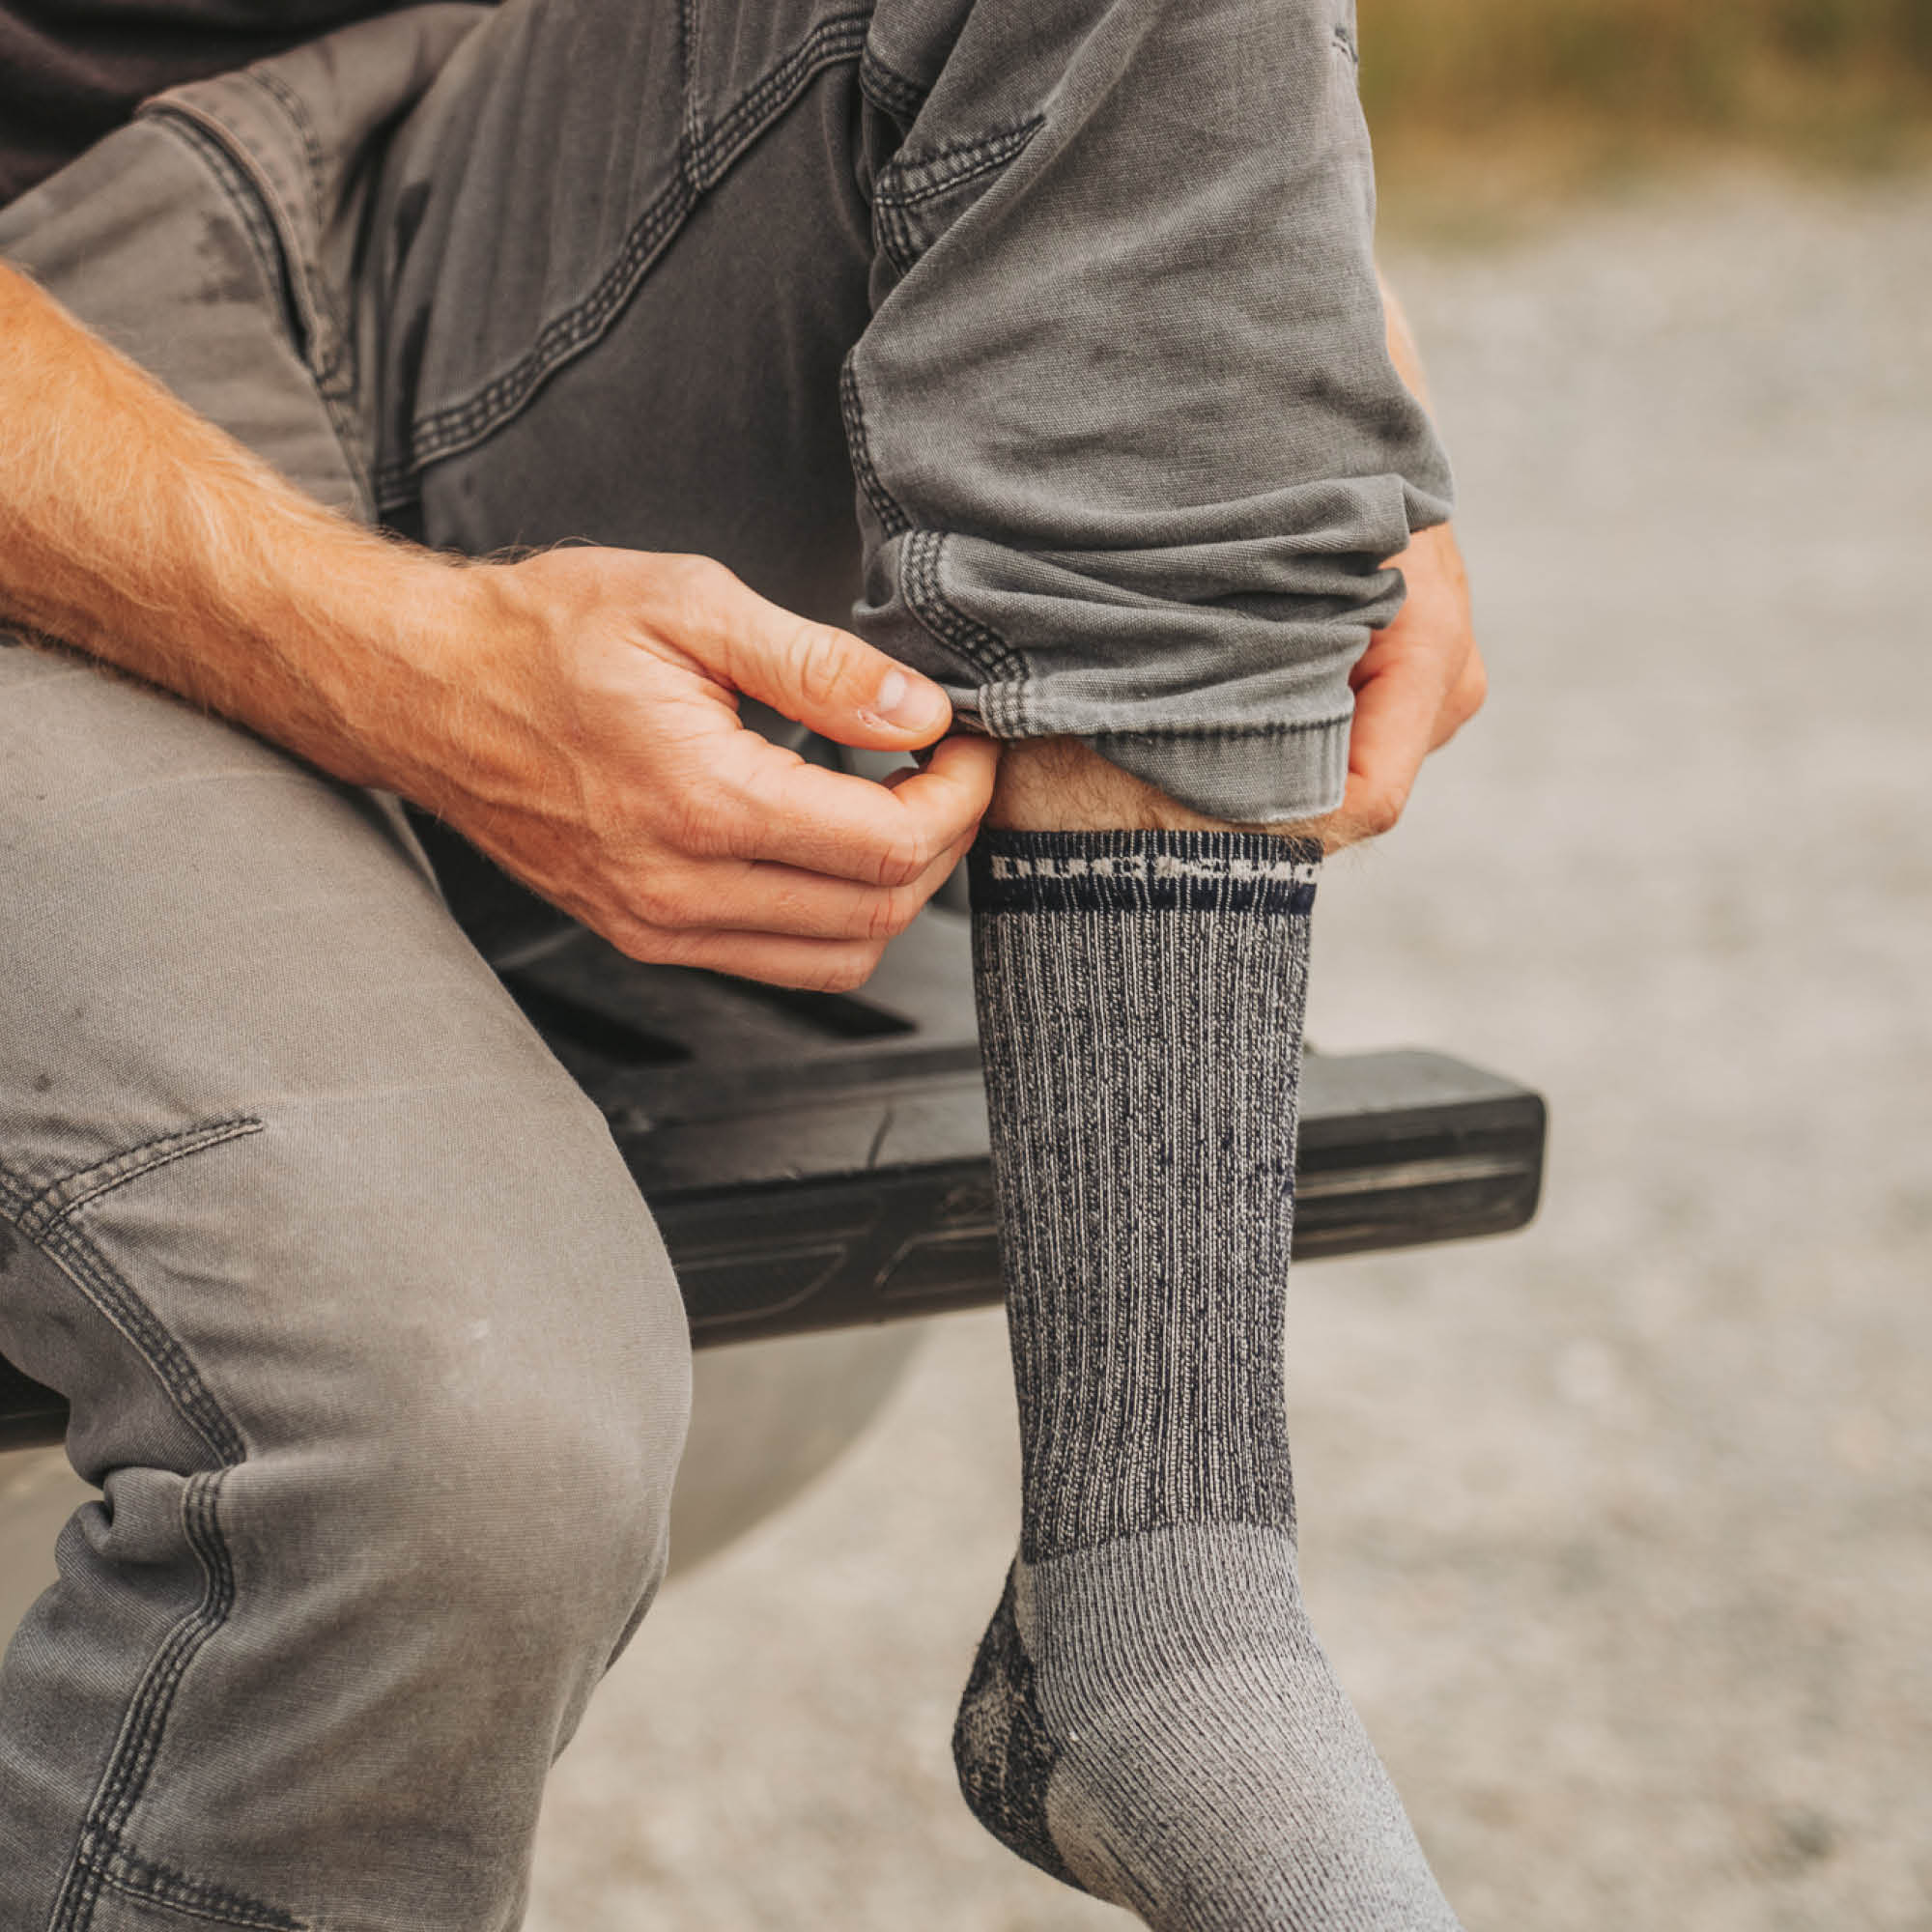 Soft & Comfortable Merino Hiking Socks - Everest